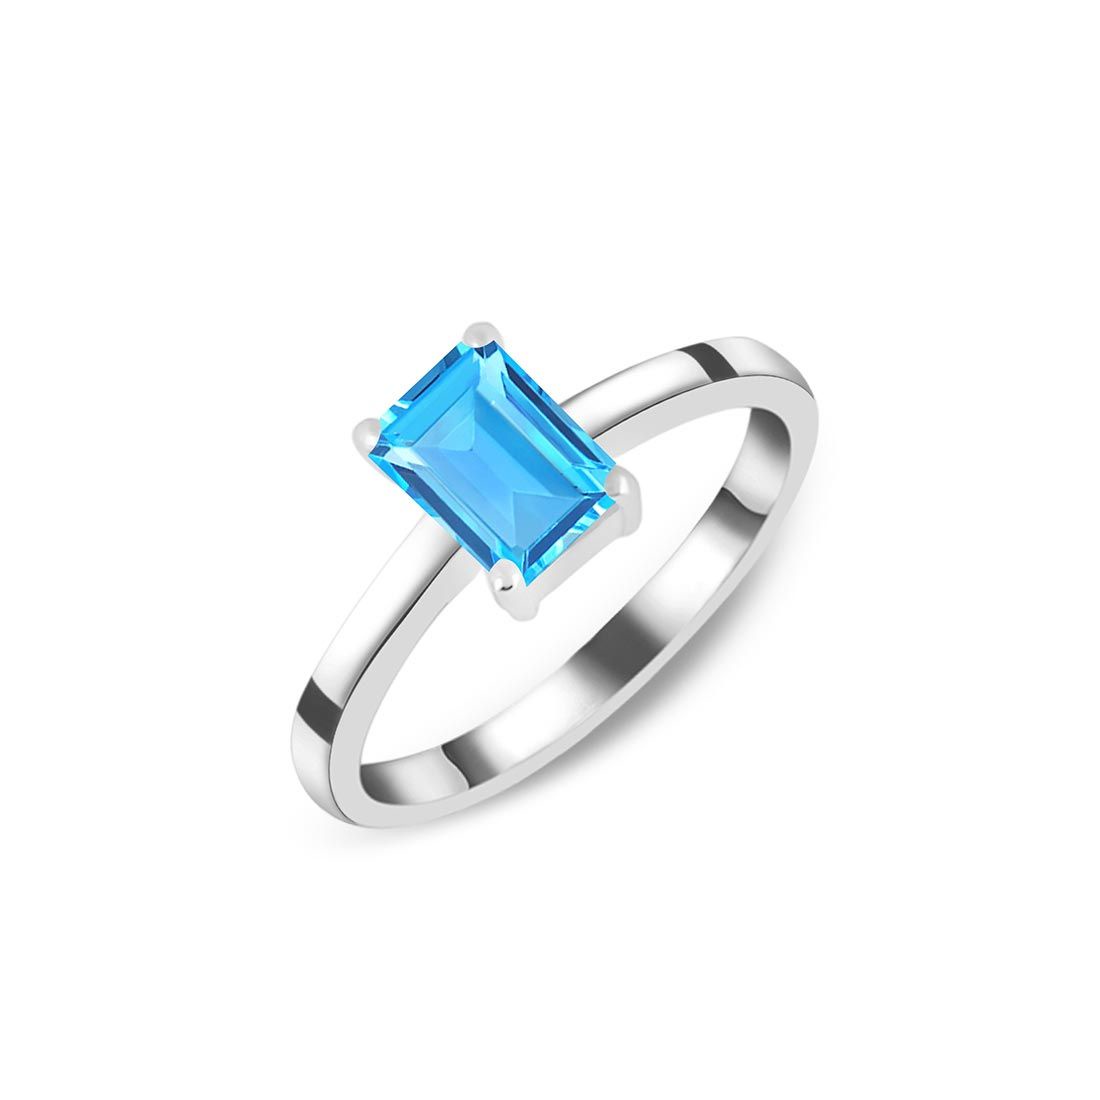 Swiss Blue Topaz Gemstone Ring For Enhanced Look